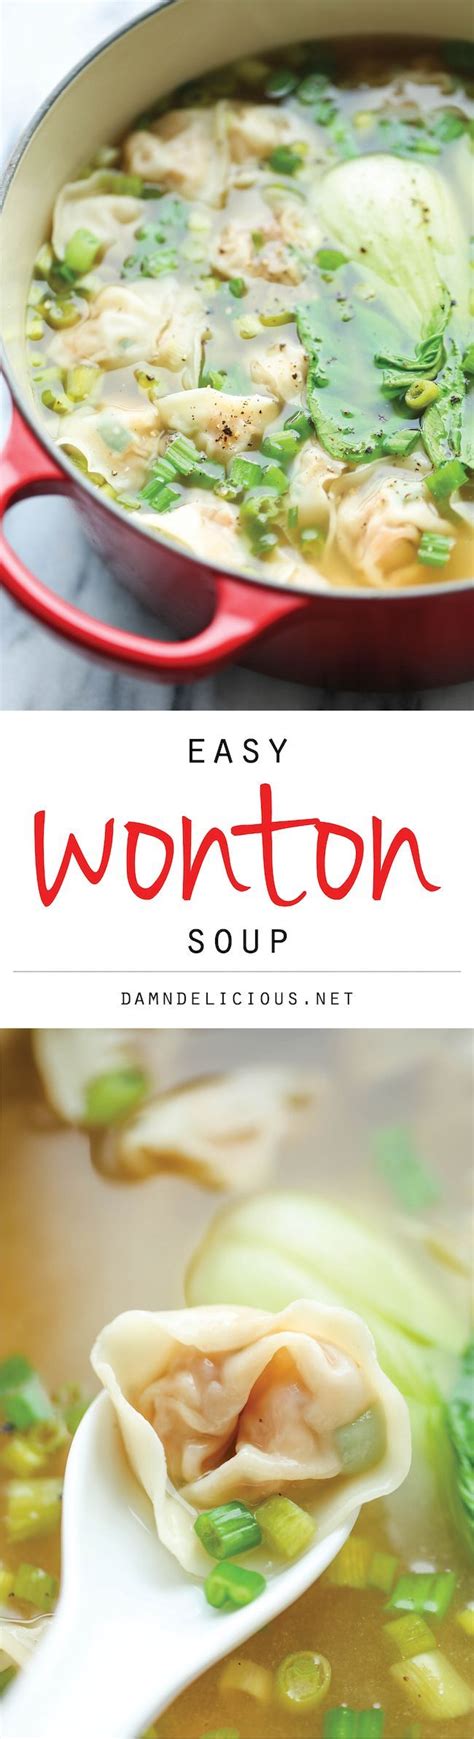 wonton soup  super easy light  comforting wonton soup